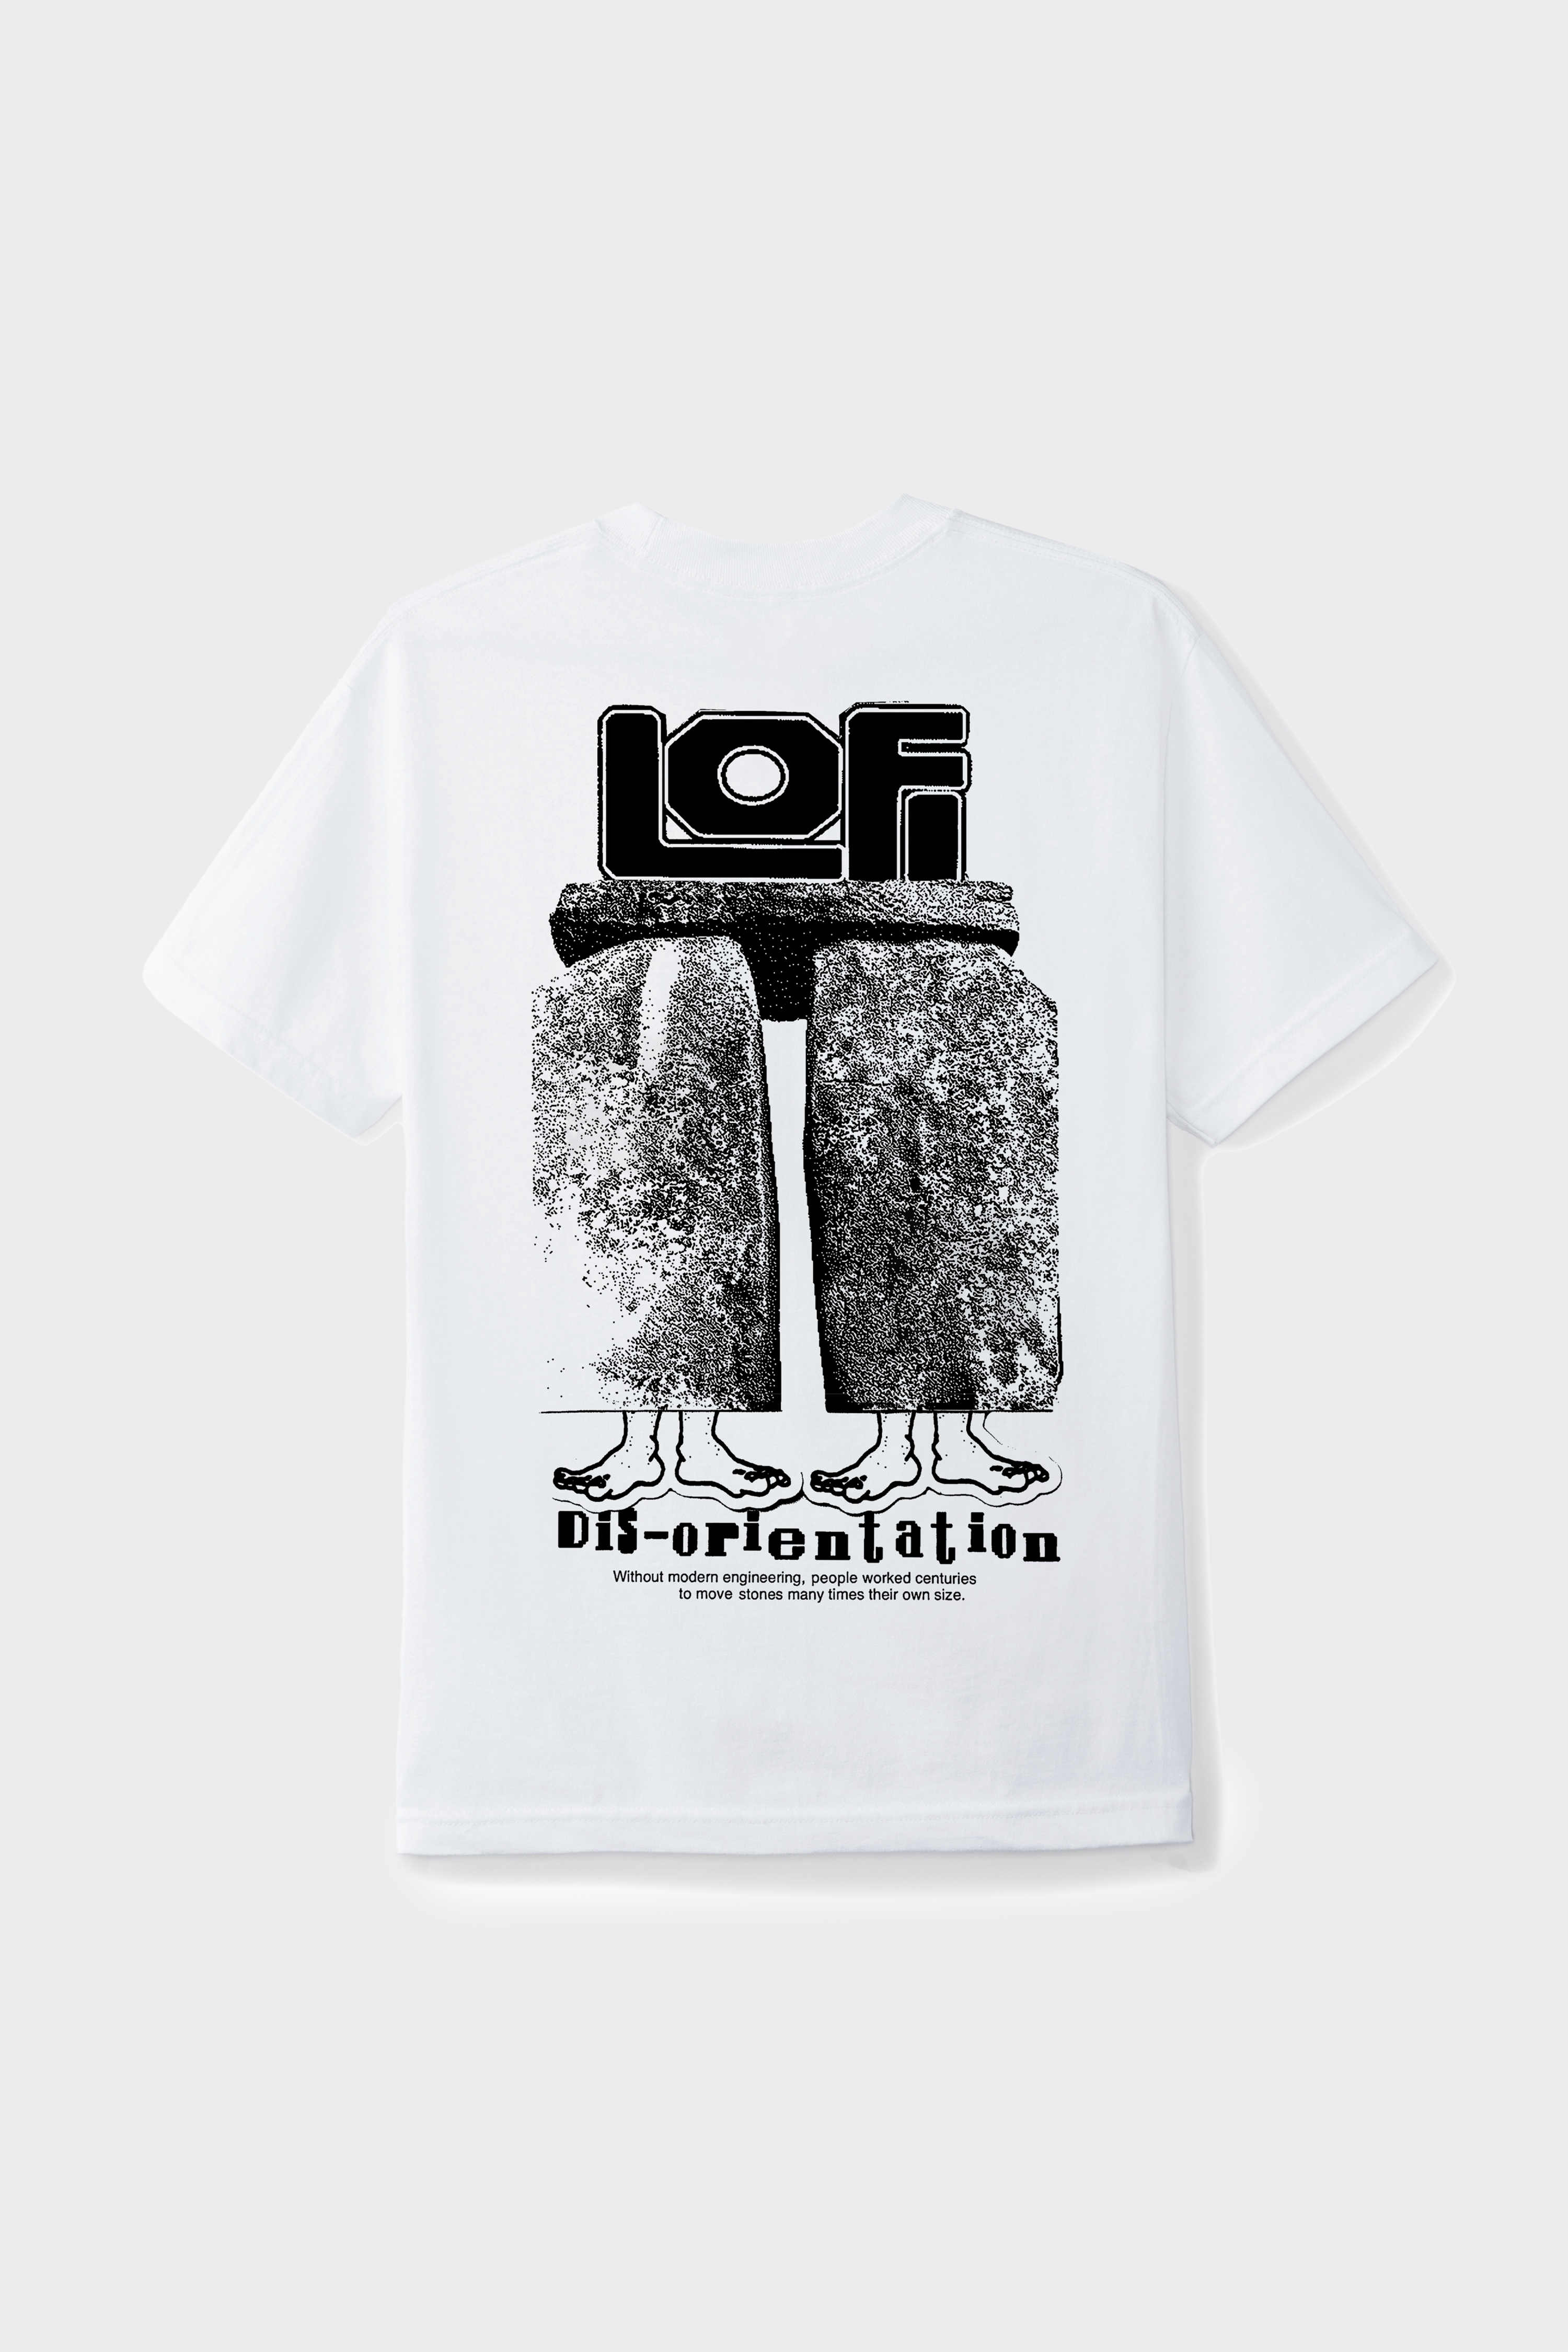 Selectshop FRAME - LO-FI Dis-Orientation Tee T-Shirts Concept Store Dubai